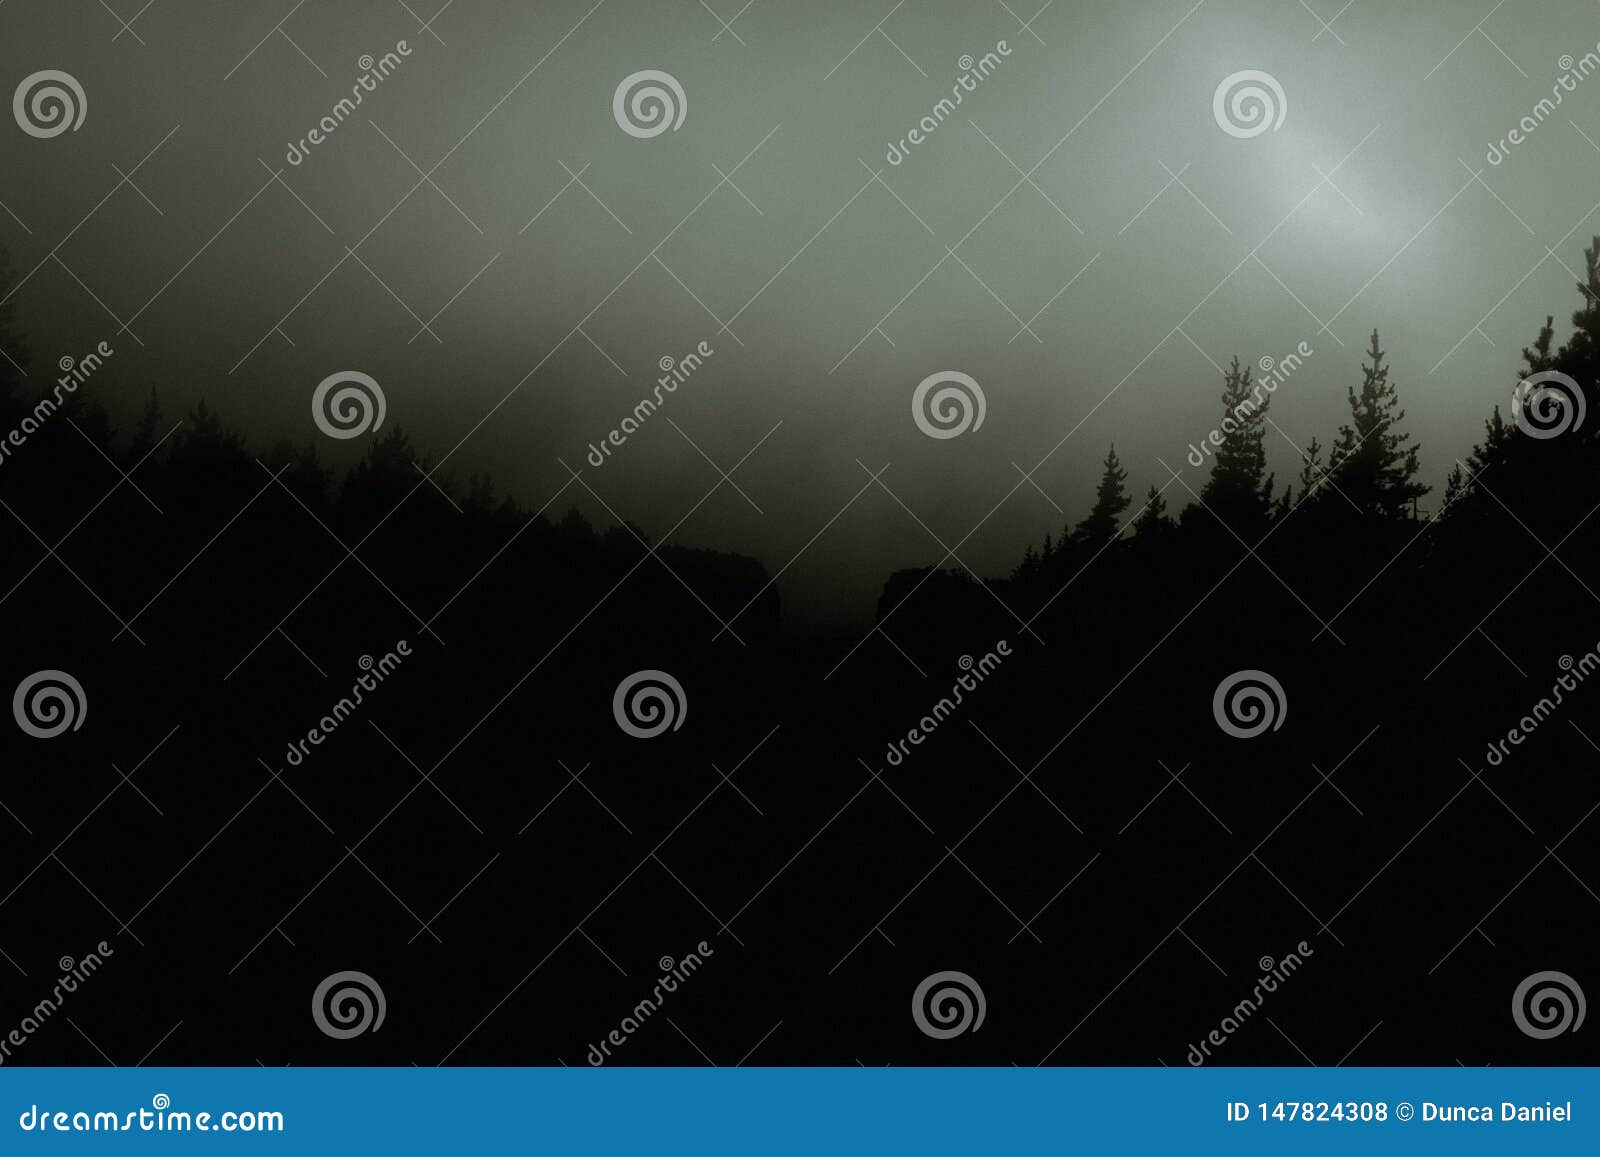 dark forrest landscape background with fog and misty woods